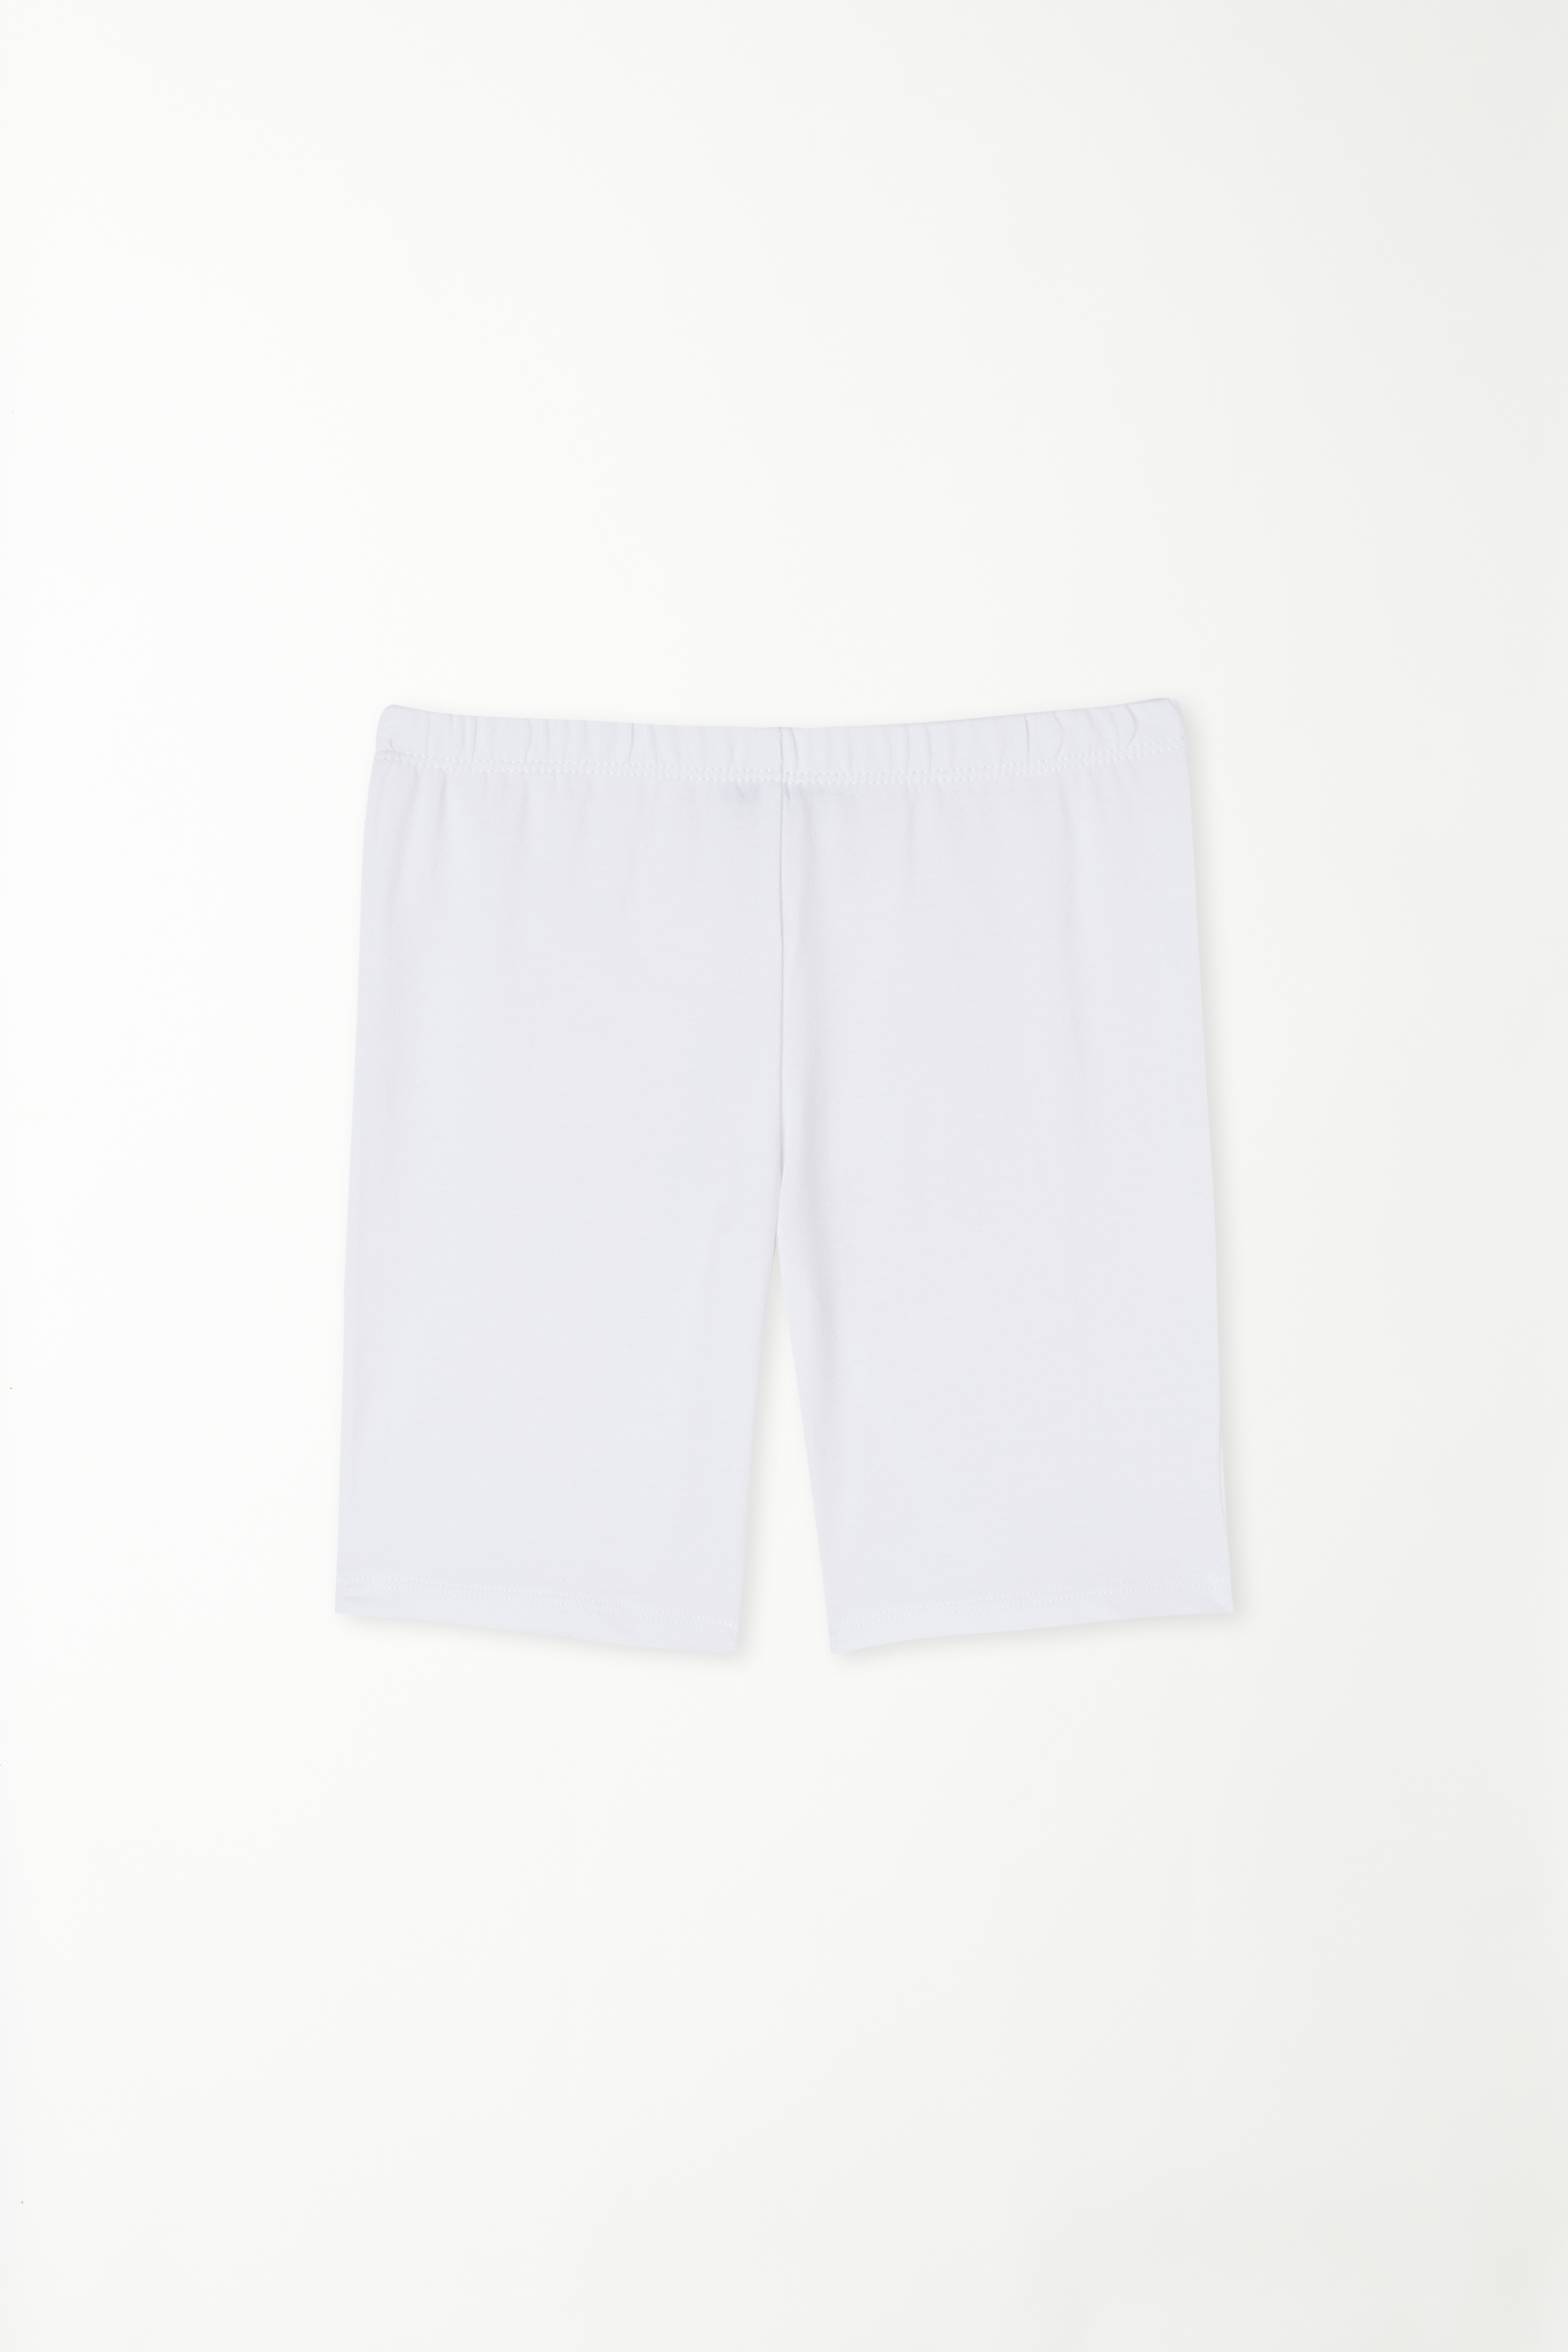 Girls’ Plain Colour Cotton Cycling Shorts